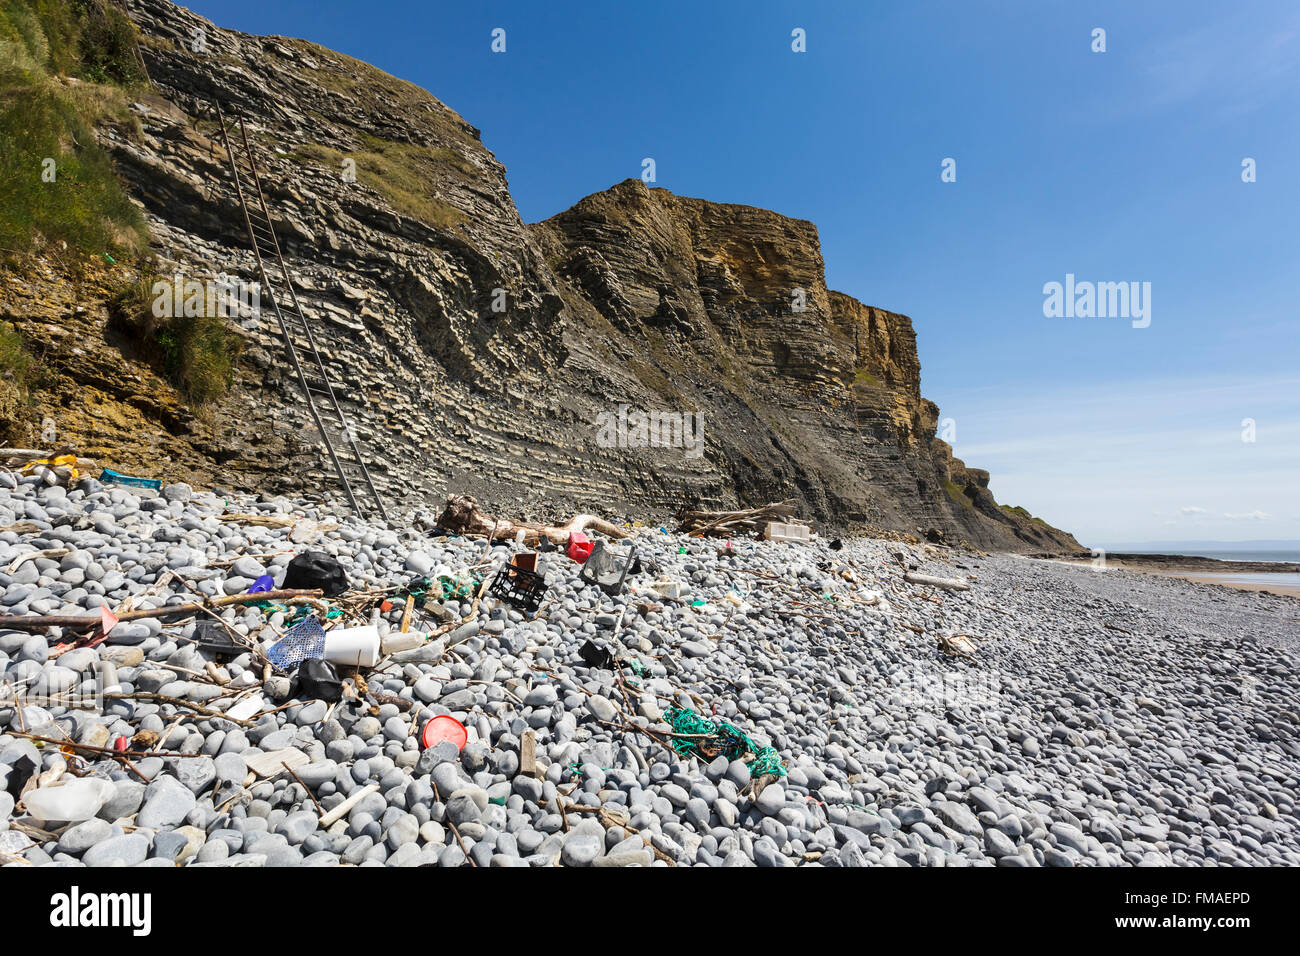 Litter on the beach. Stock Photo